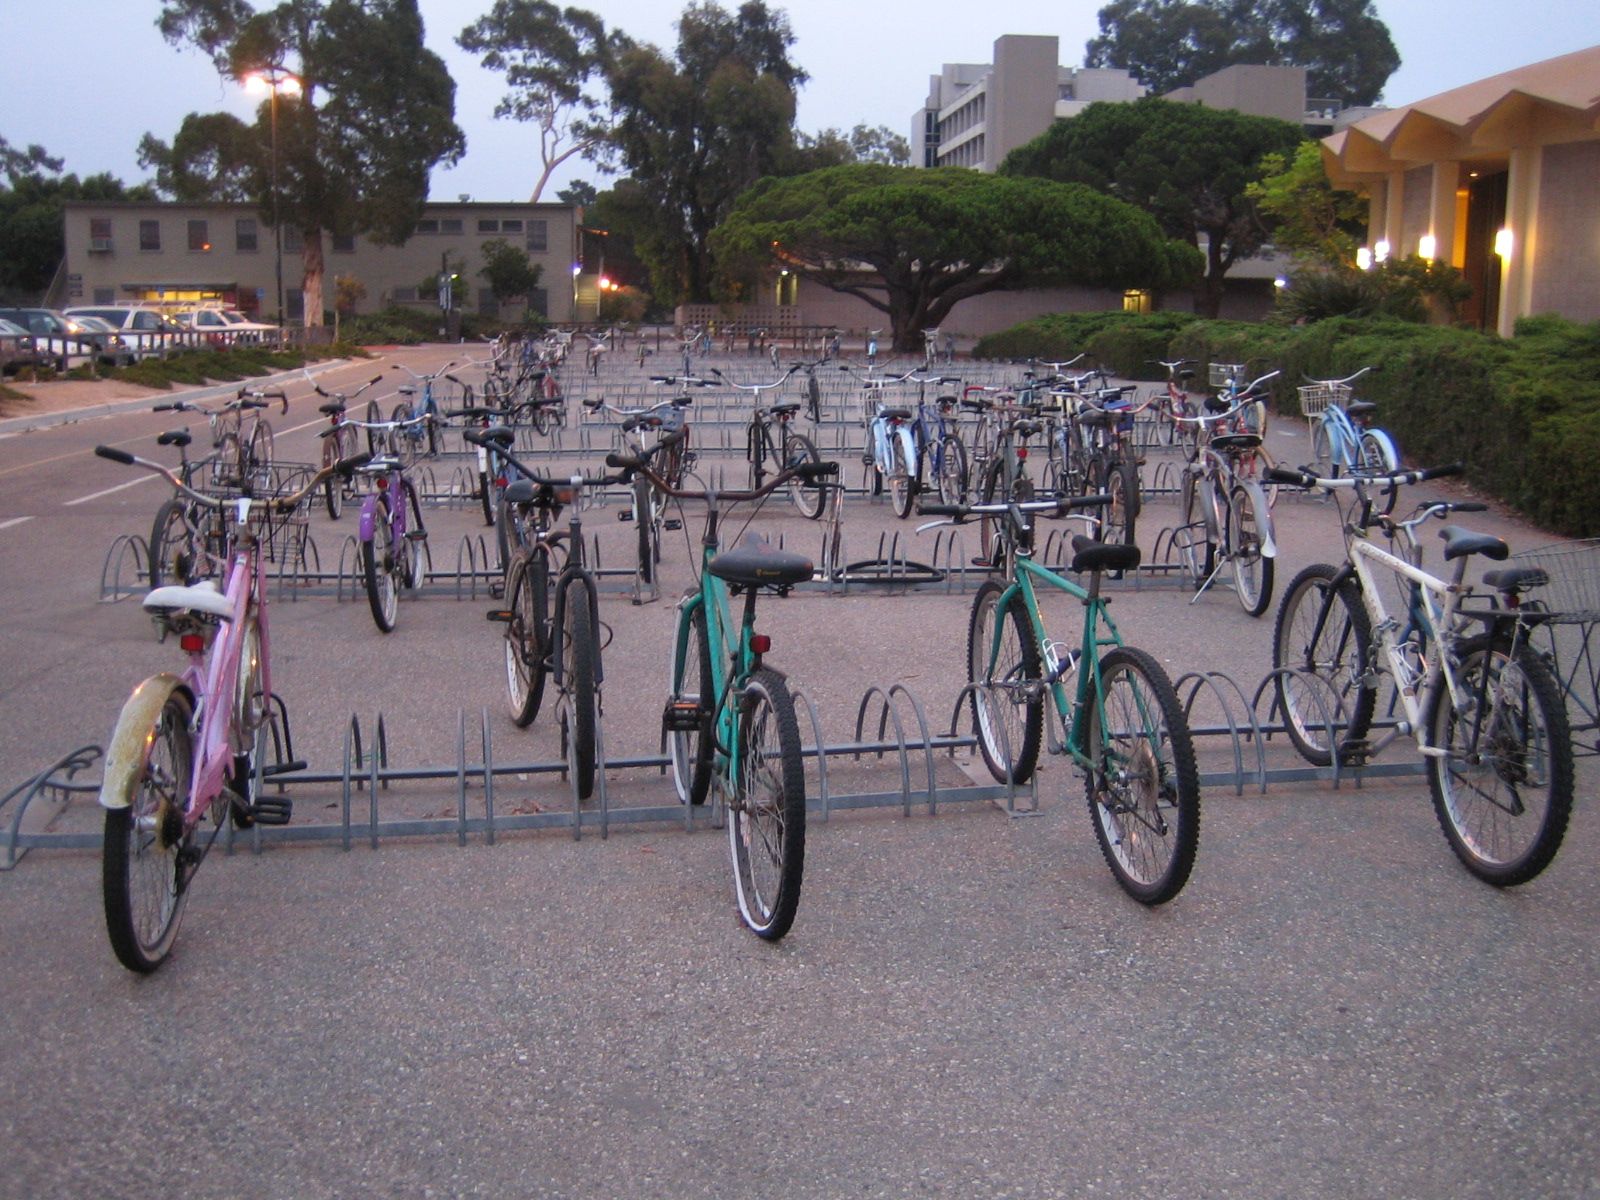 [Bicycle+Parking+Lot+7+23+2008.jpg]